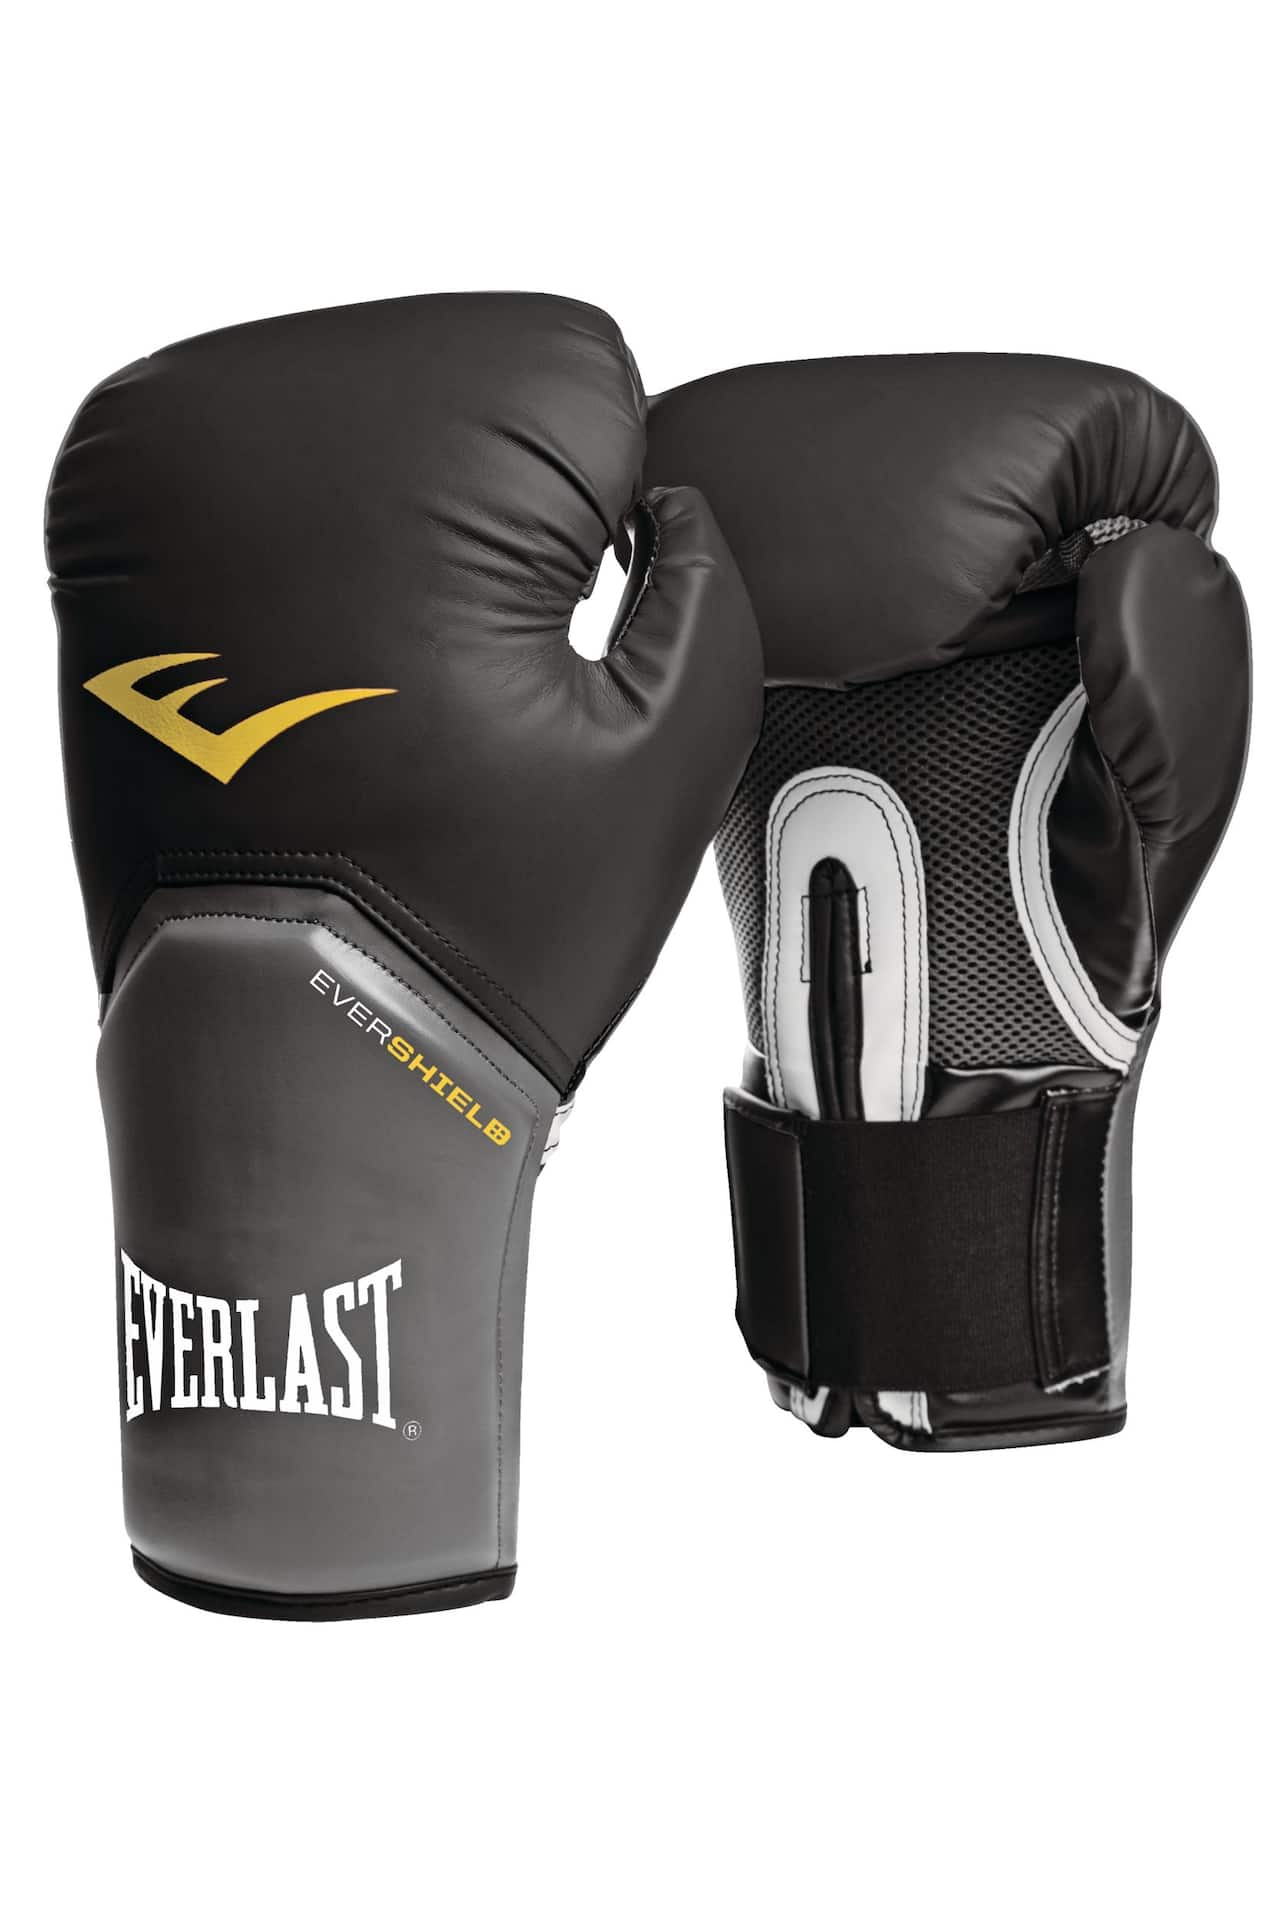 Everlast Pro Style Elite Training Gloves, Black, 12-oz | Canadian Tire